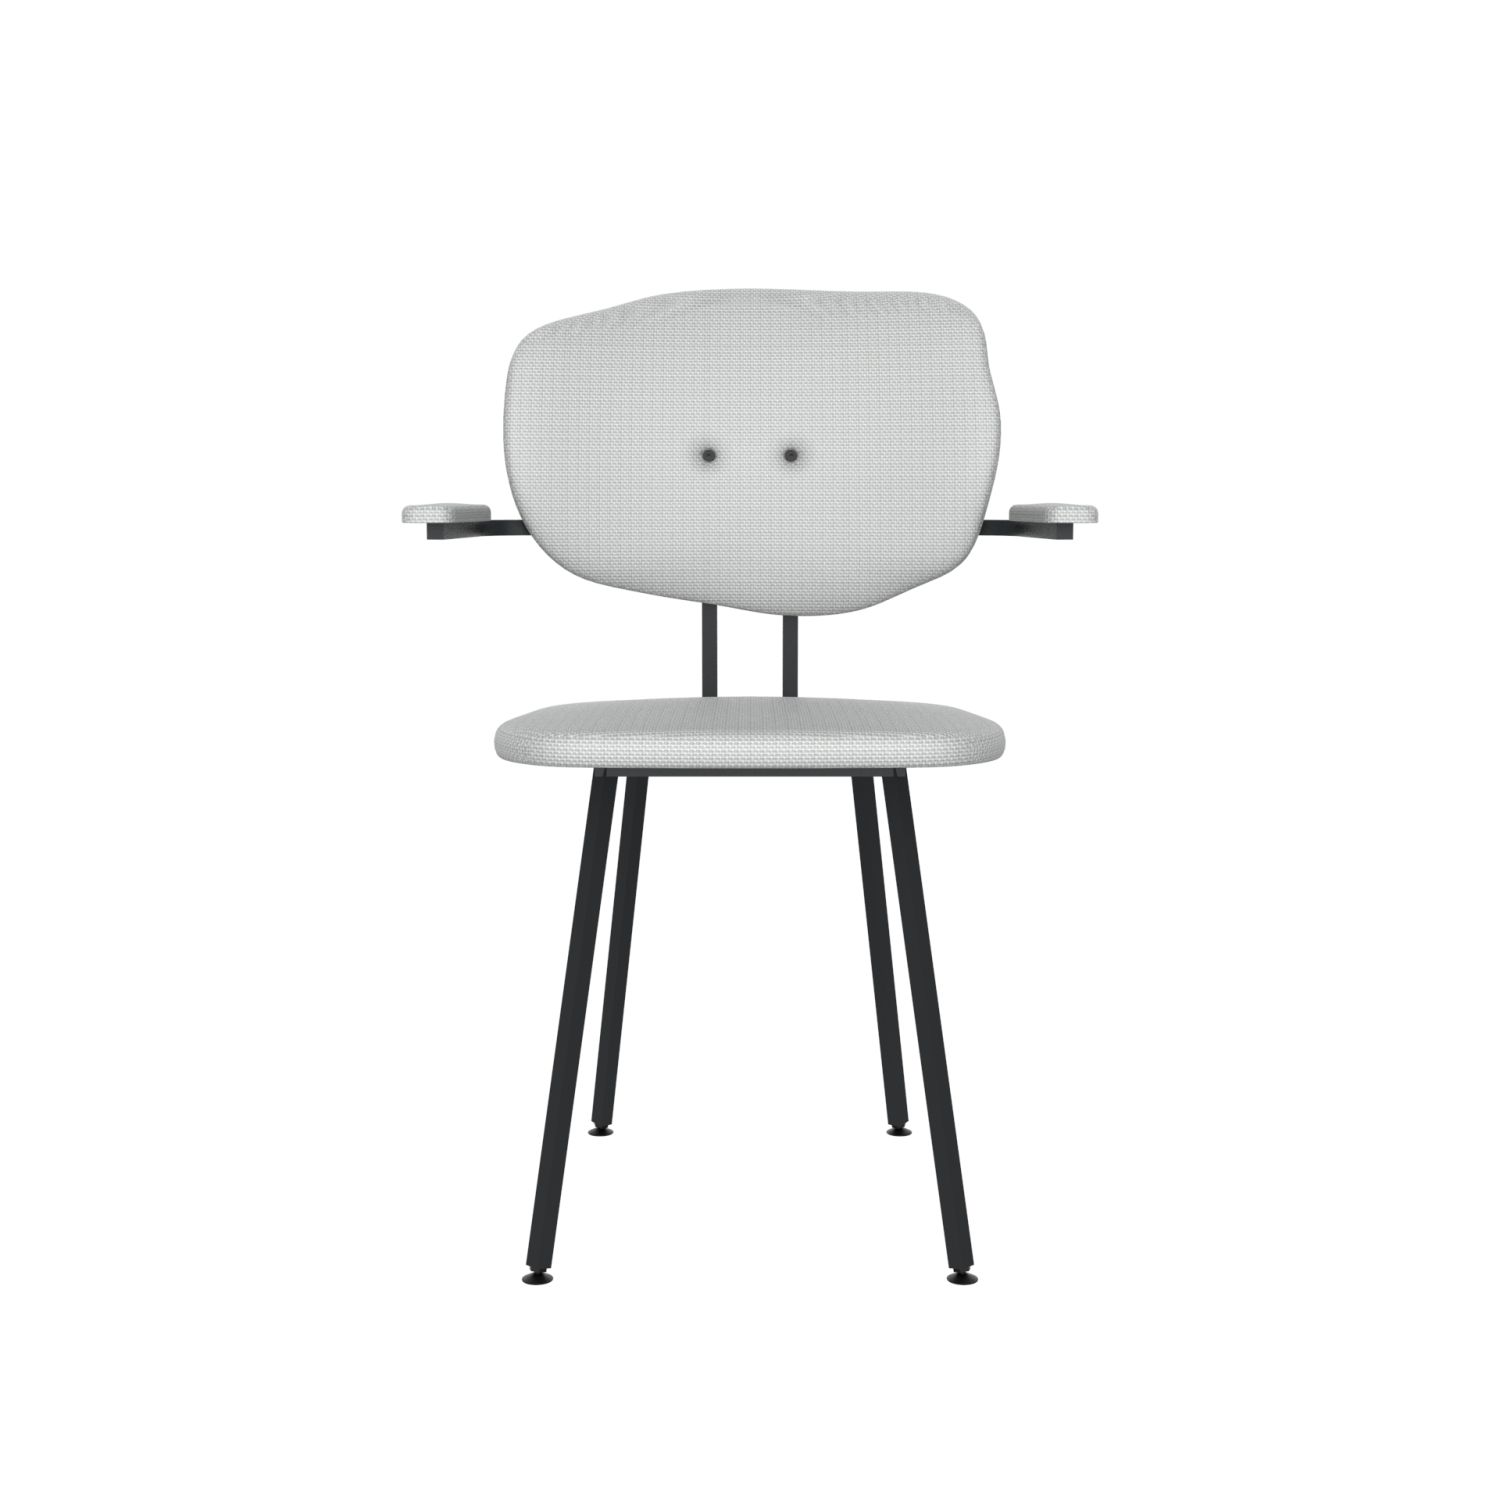 lensvelt maarten baas chair 102 not stackable with armrests backrest f breeze light grey 171 black ral9005 hard leg ends